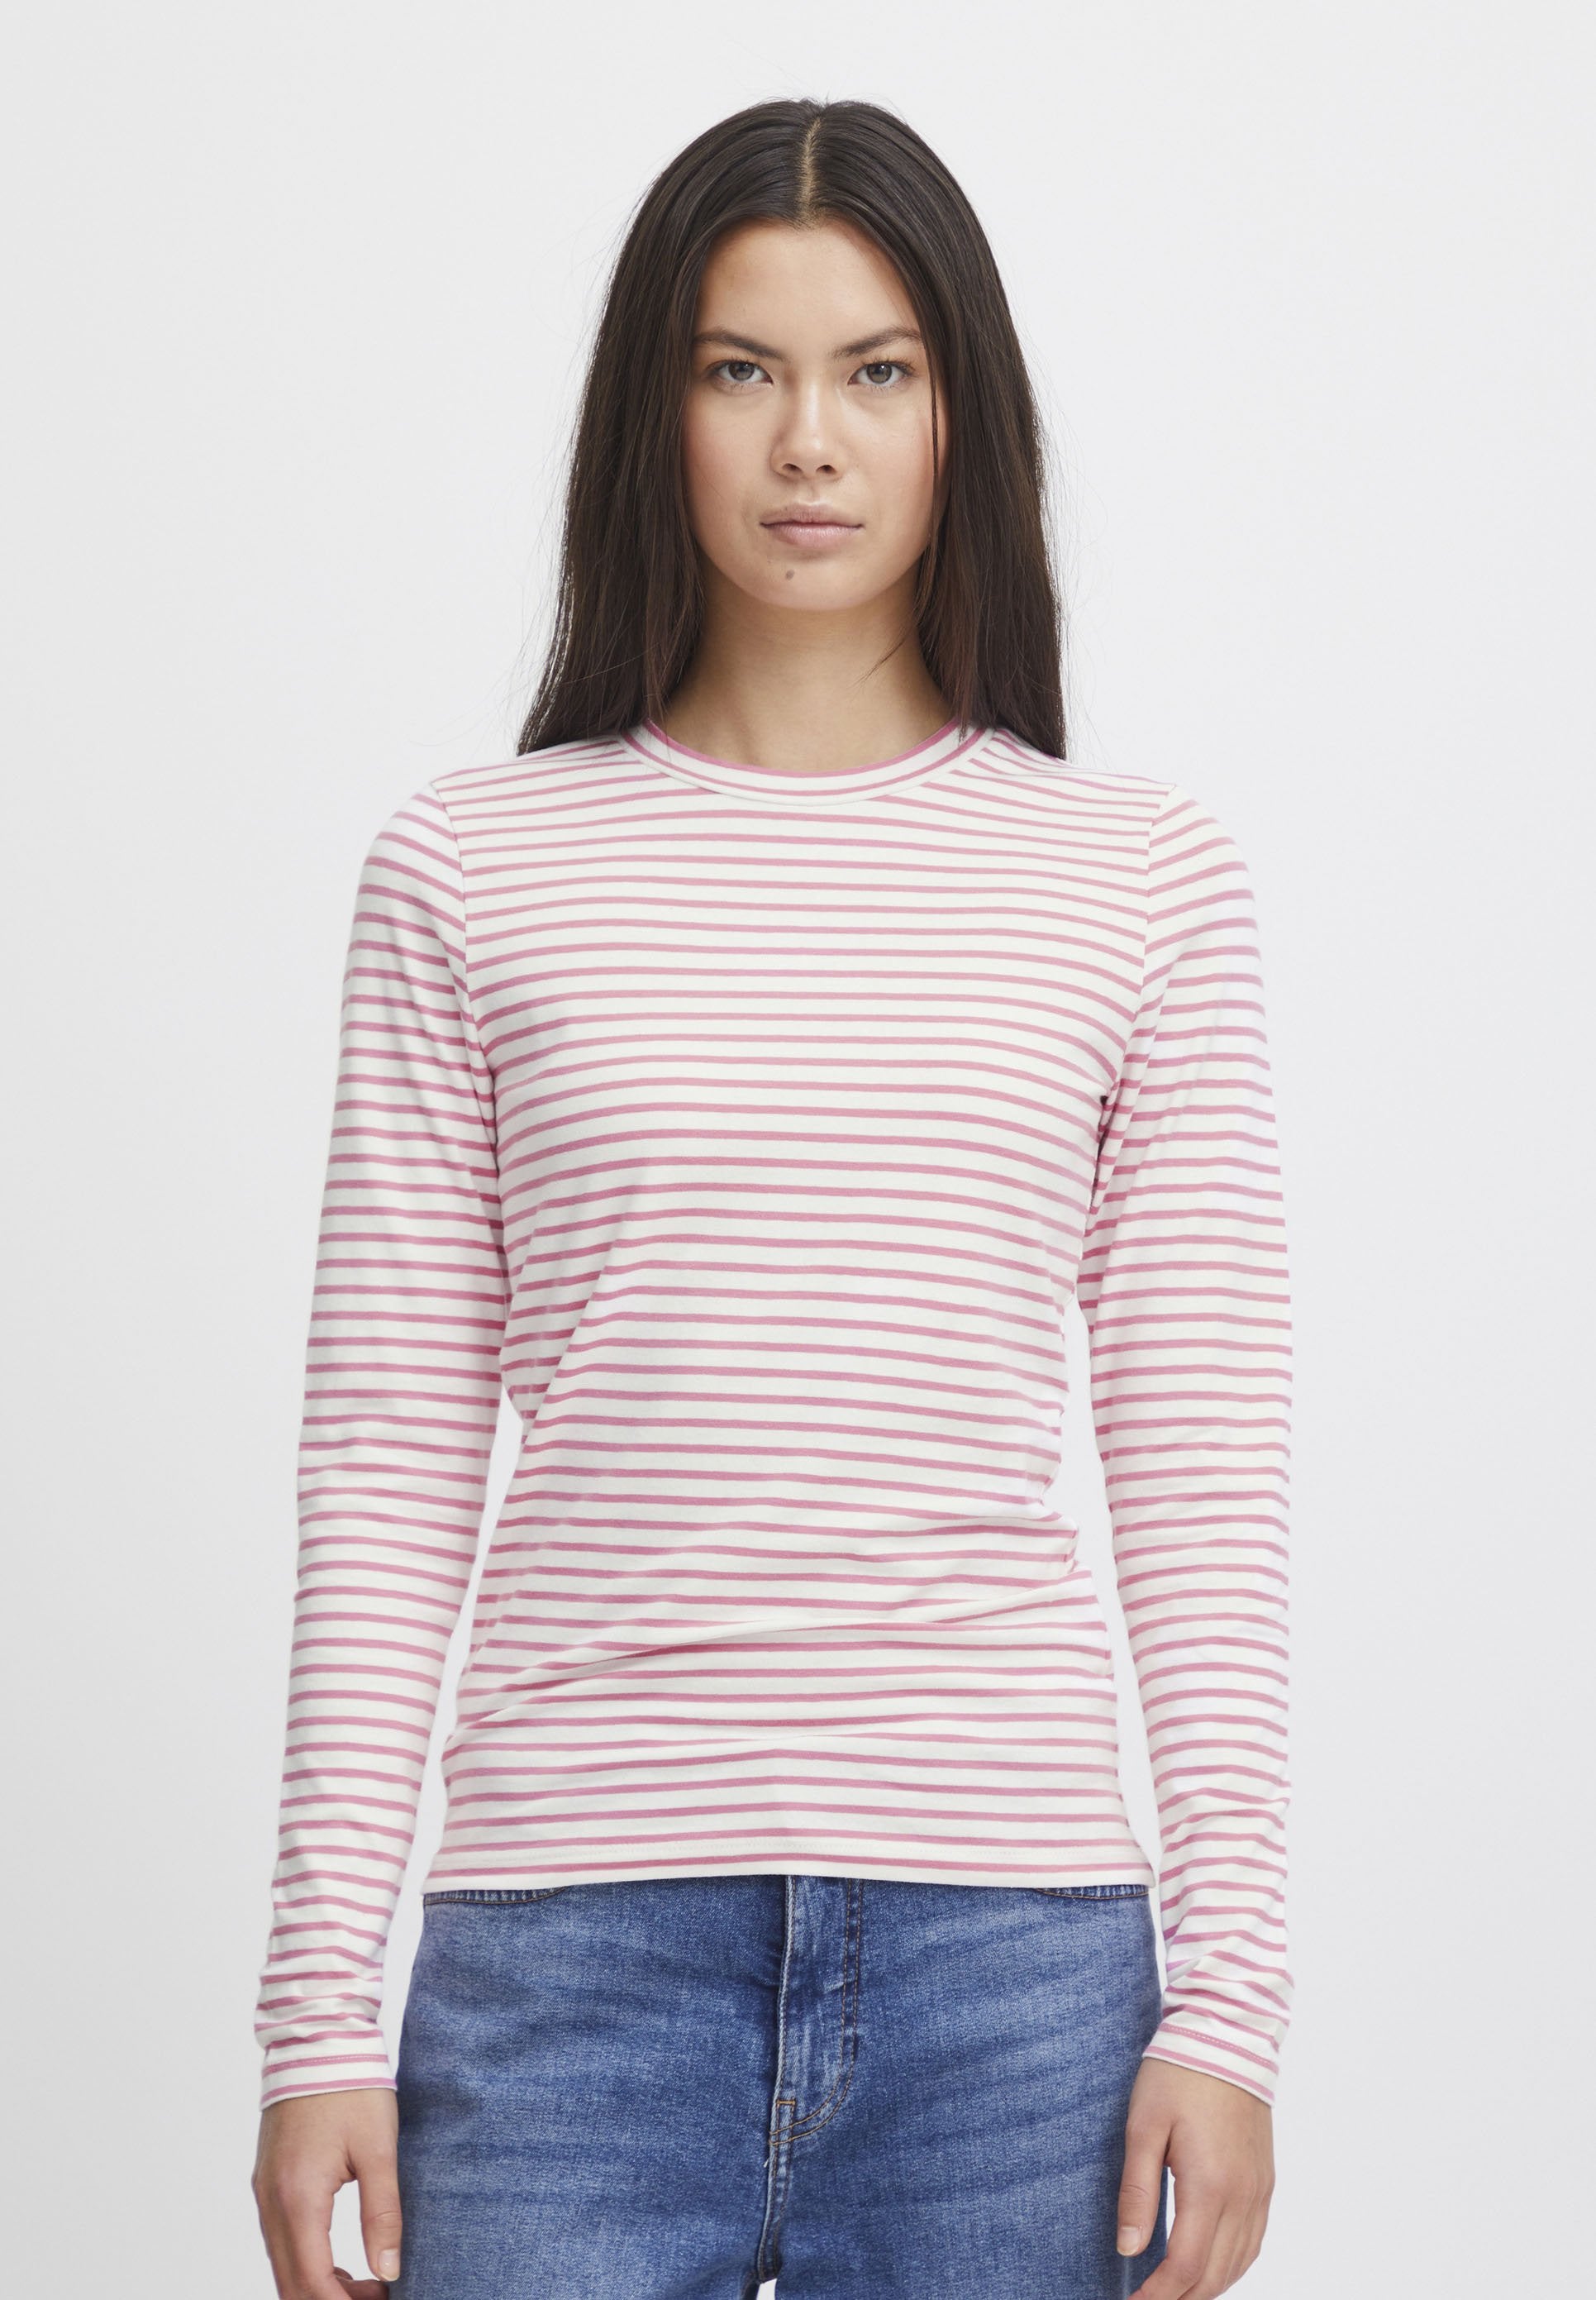 Ichi long sleeved tee with pink stripe